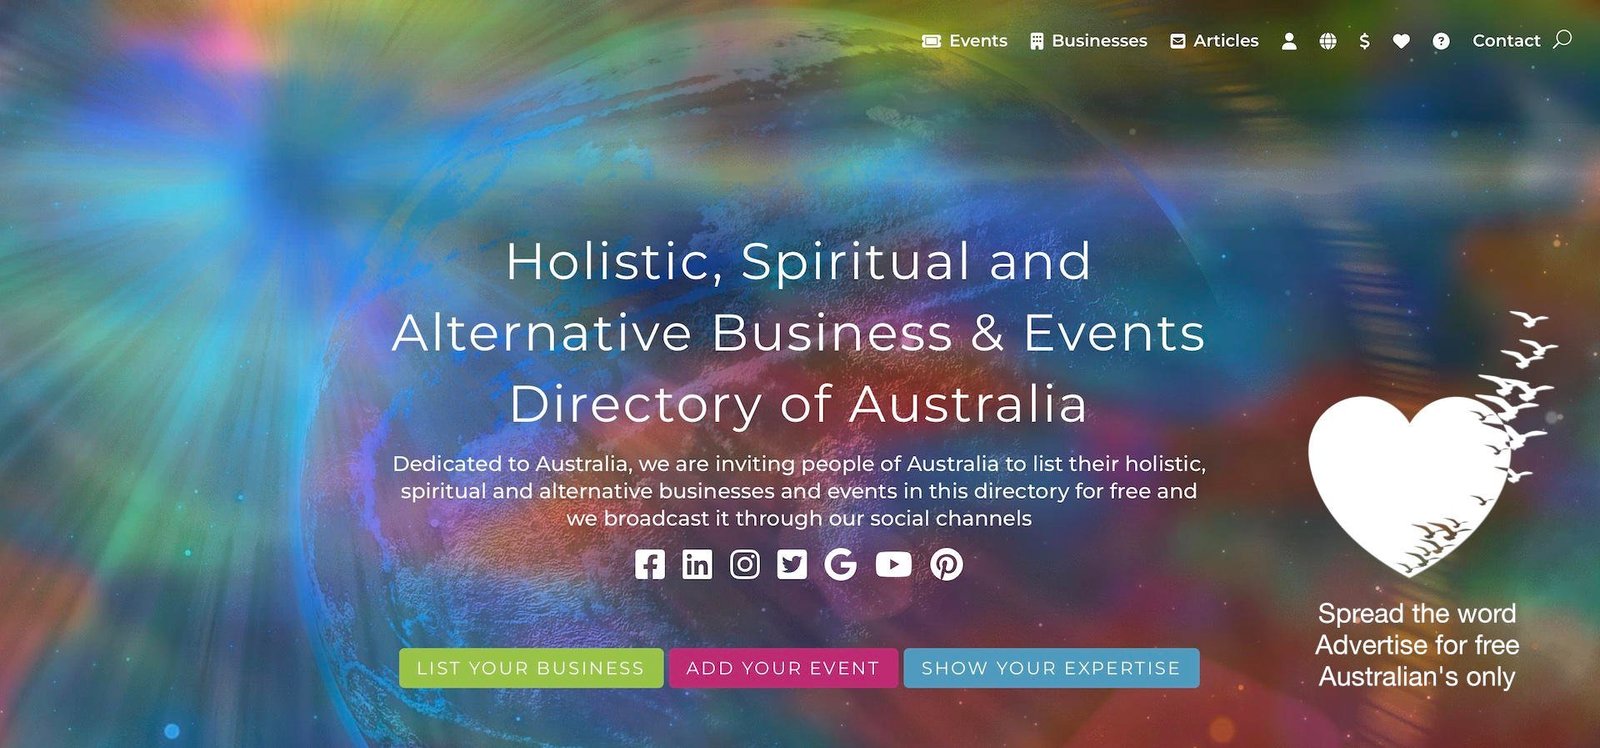 Holistic spiritual alternative business and events directory of Australia